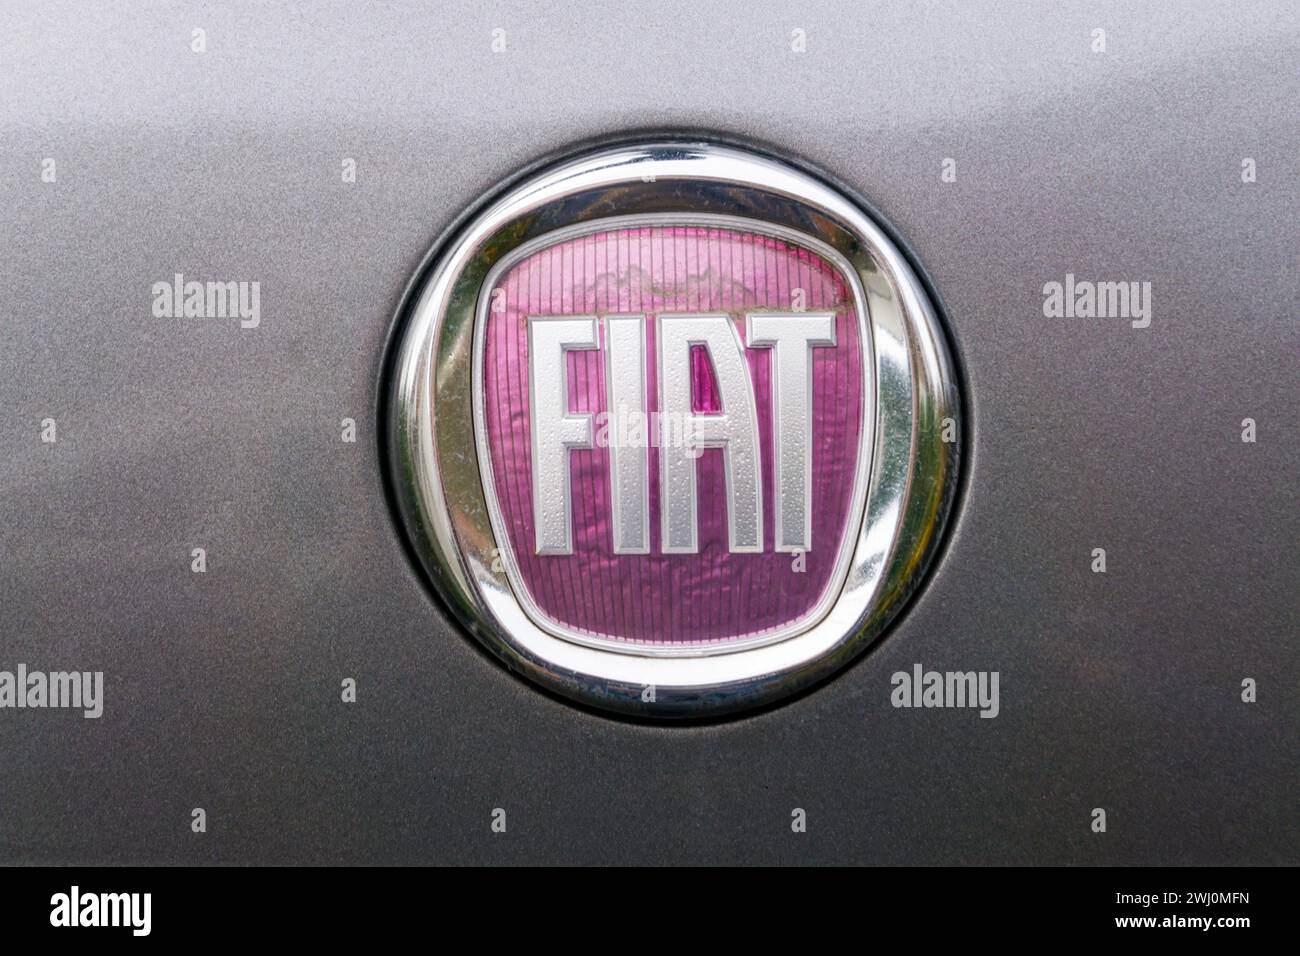 Logo on a Fiat car. Stock Photo